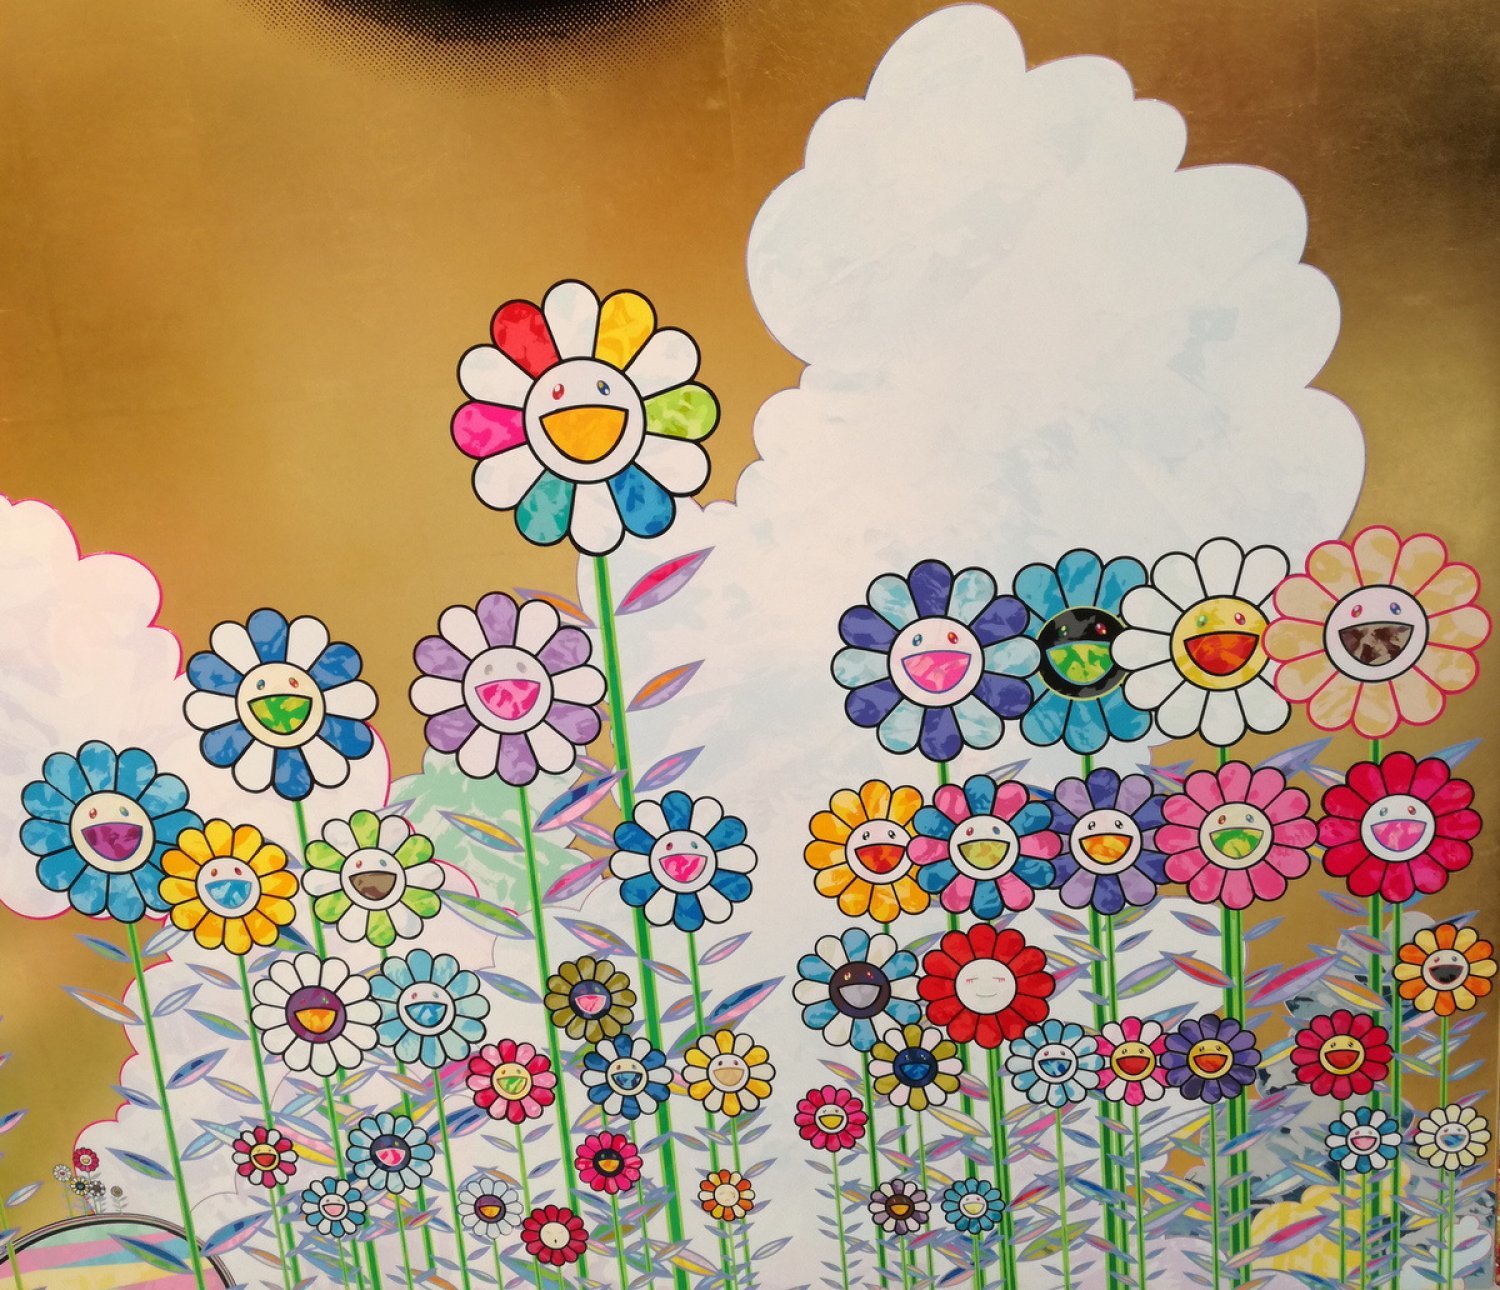 Exposition de Takashi Murakami - Learning the Magic of Painting